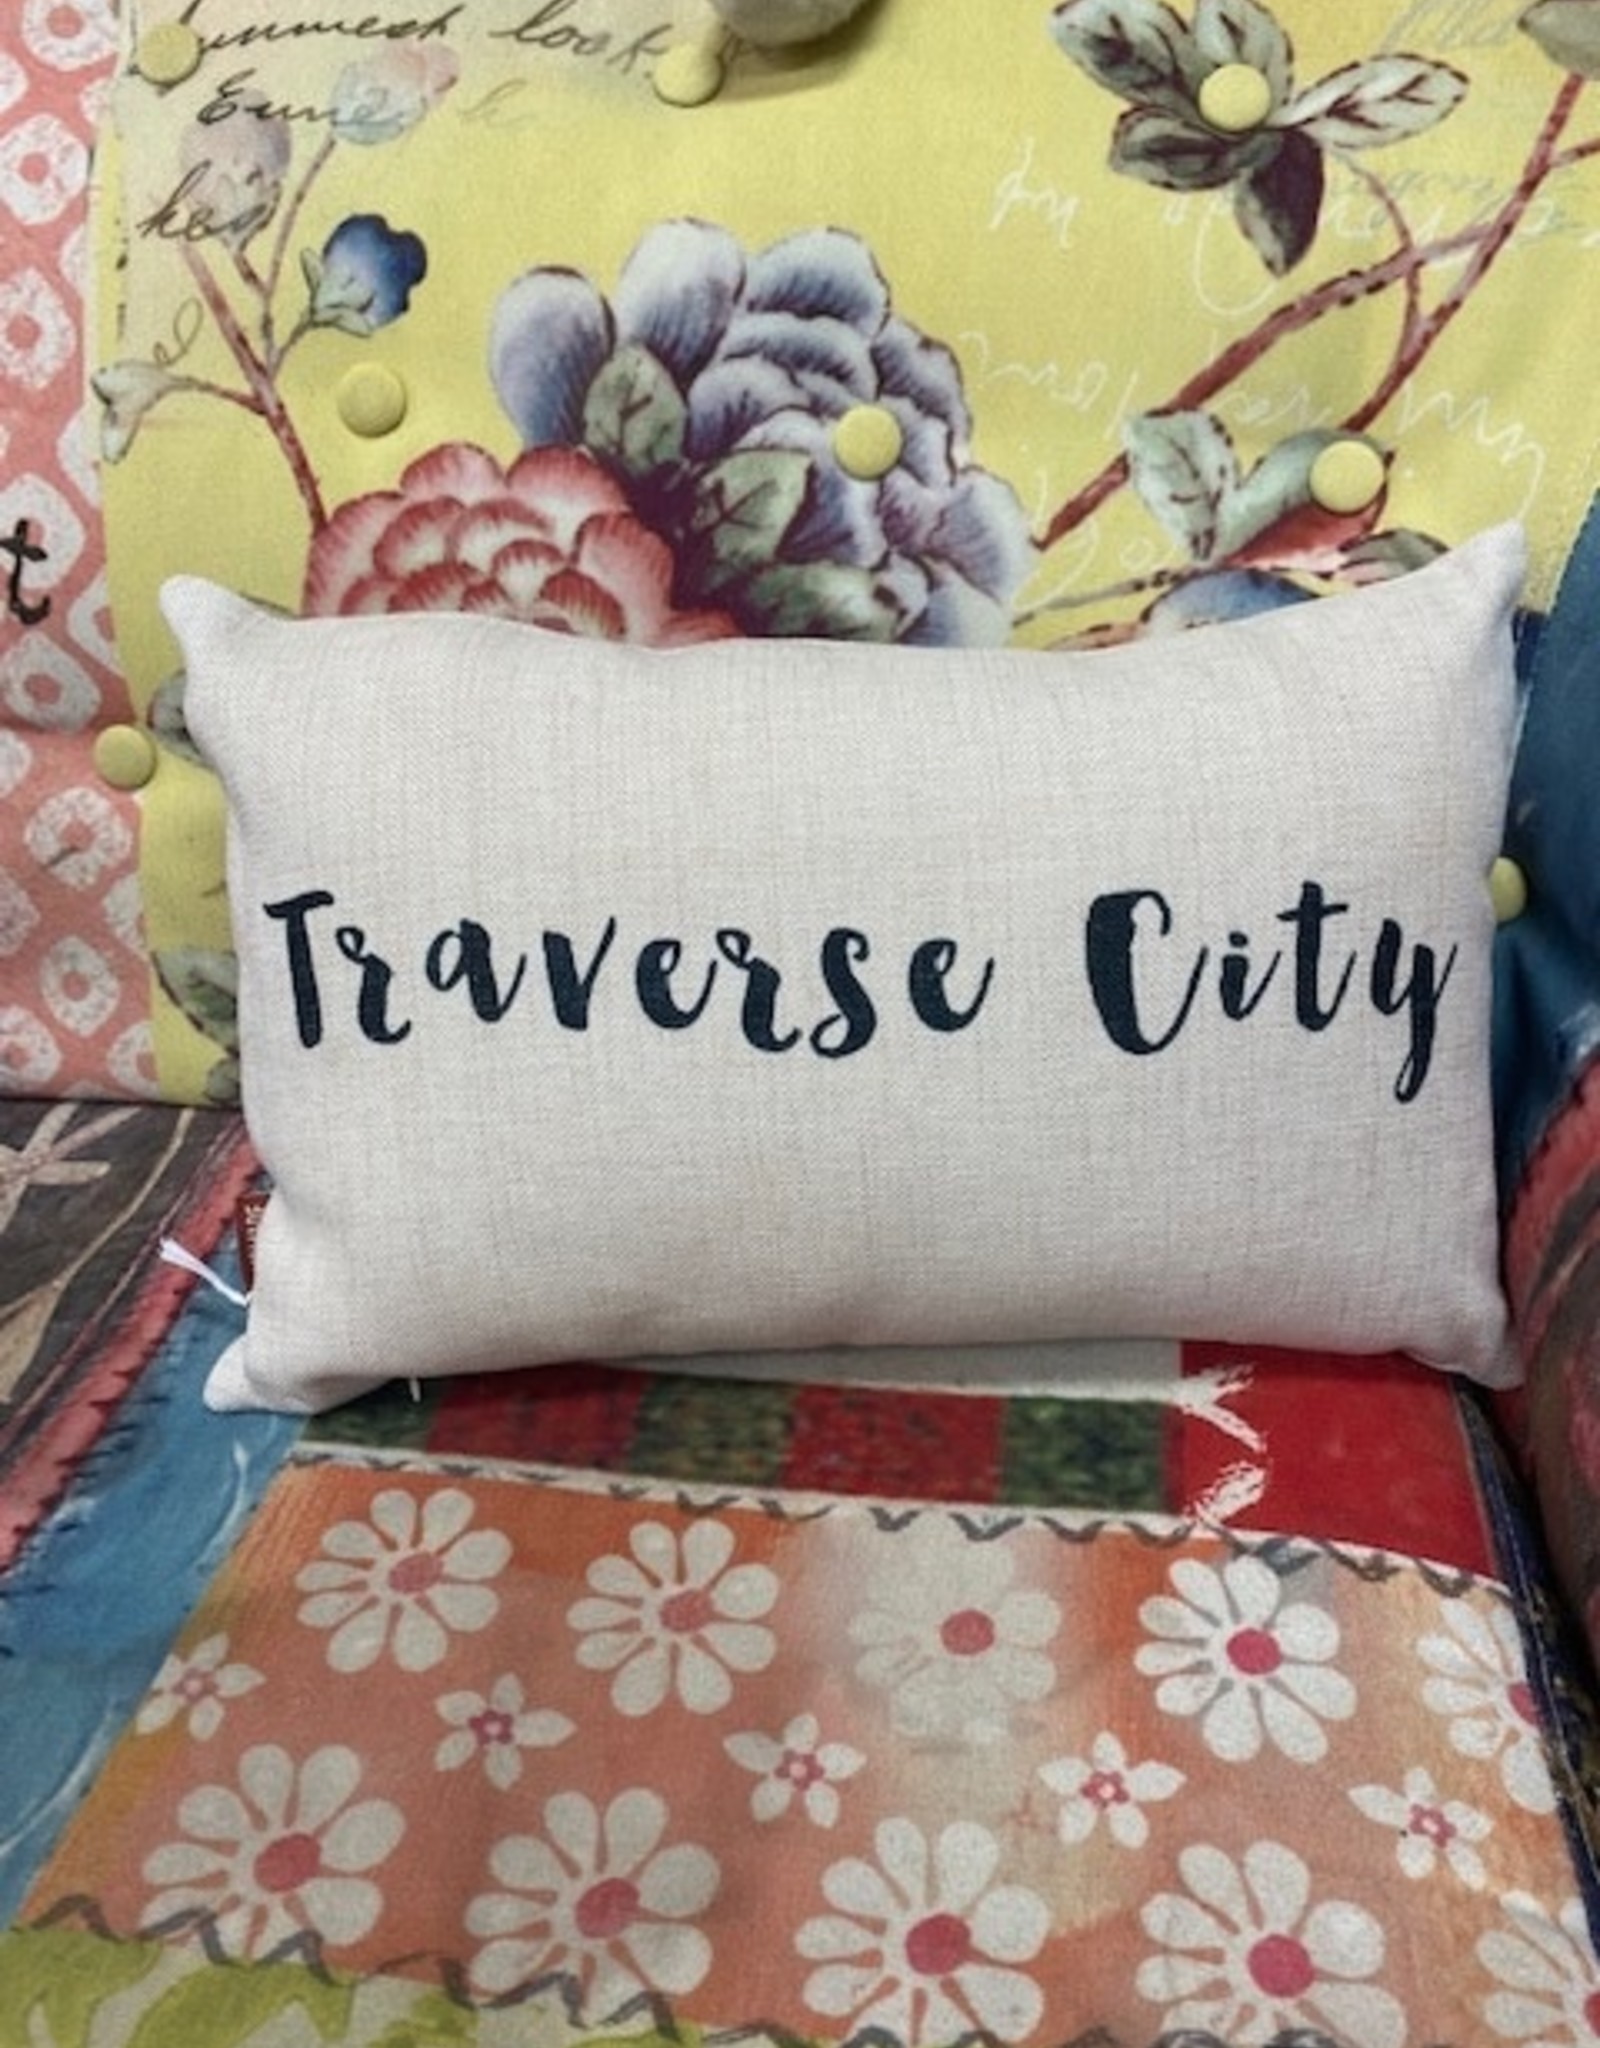 Pillow Traverse City pillow